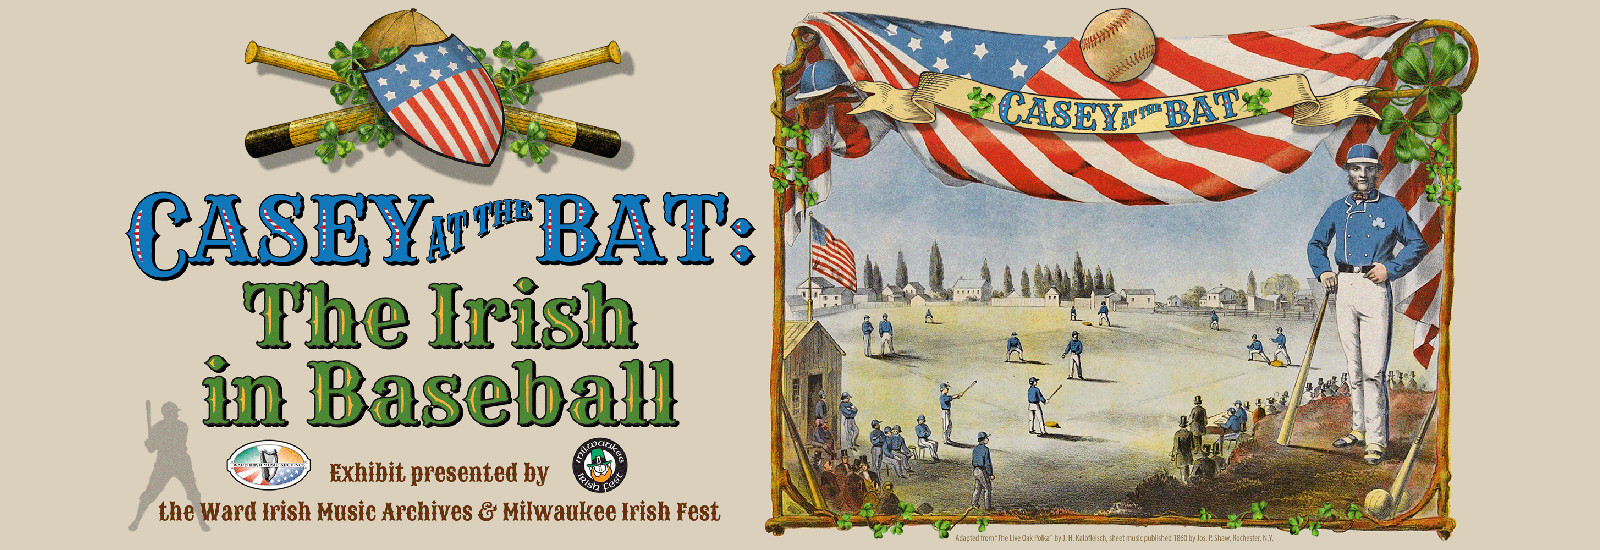 Casey at the Bat: The Irish in Baseball Exhibit